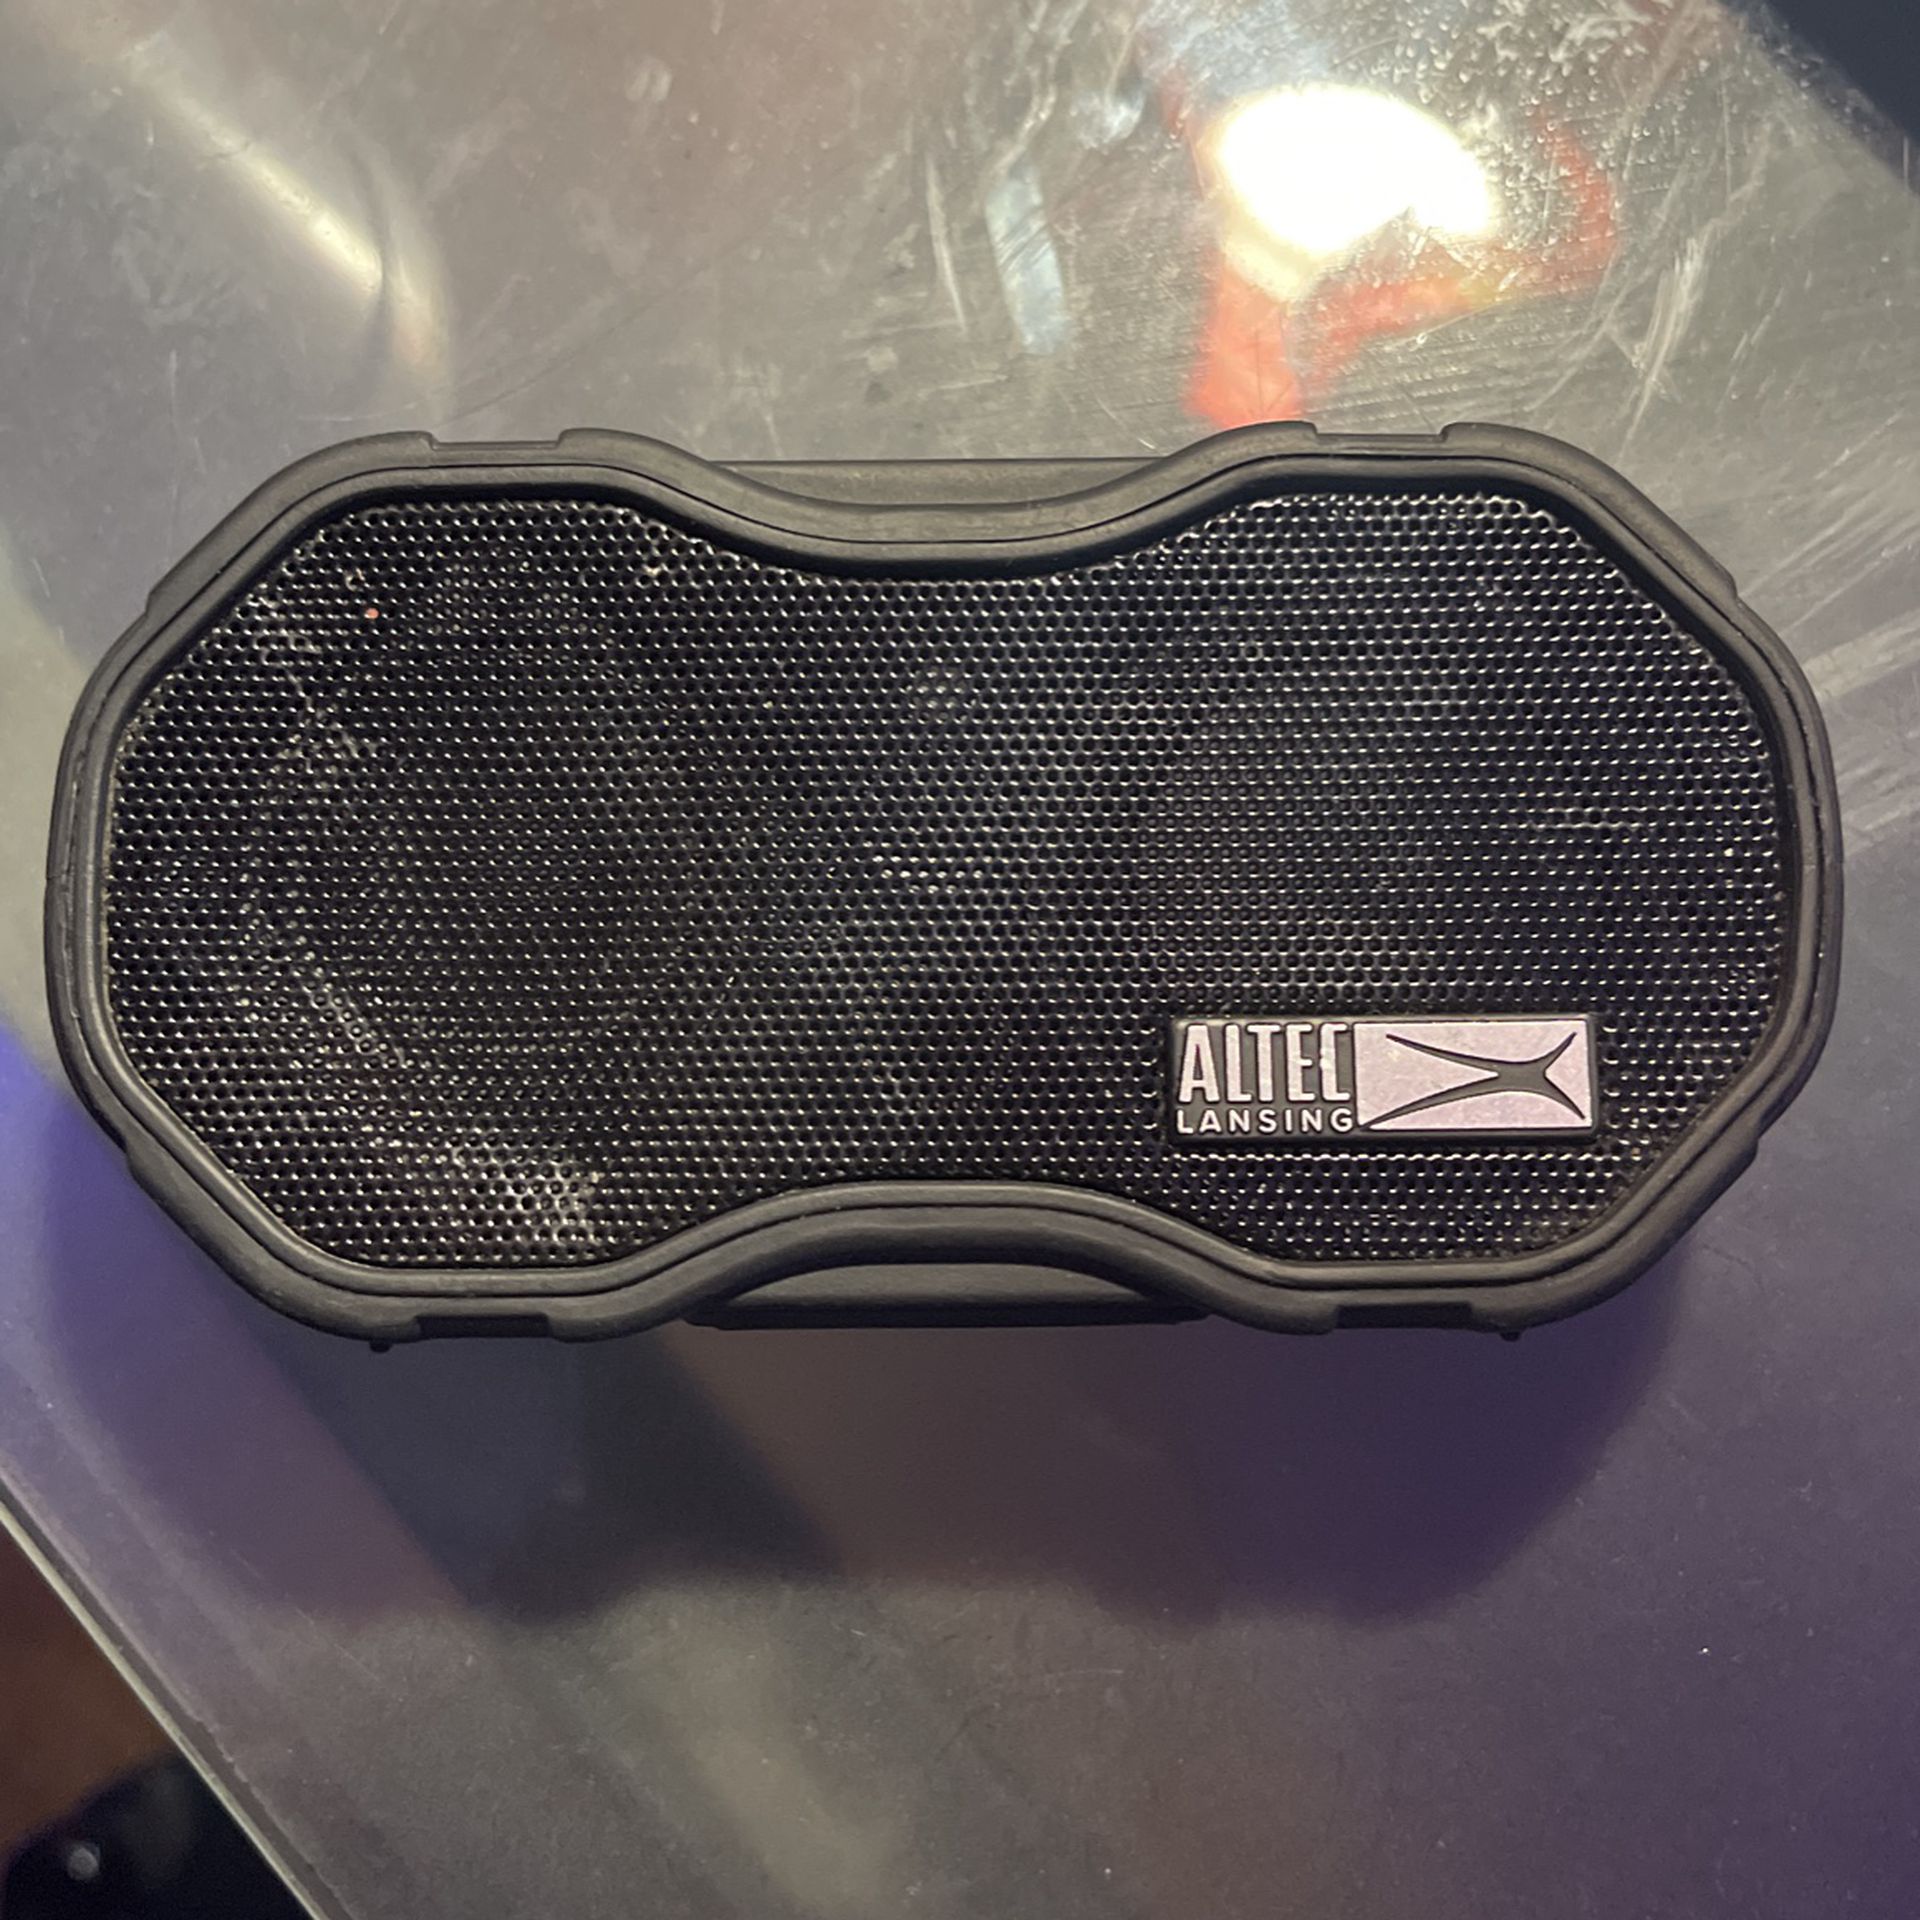 ALTECH Lansing Bluetooth Speaker